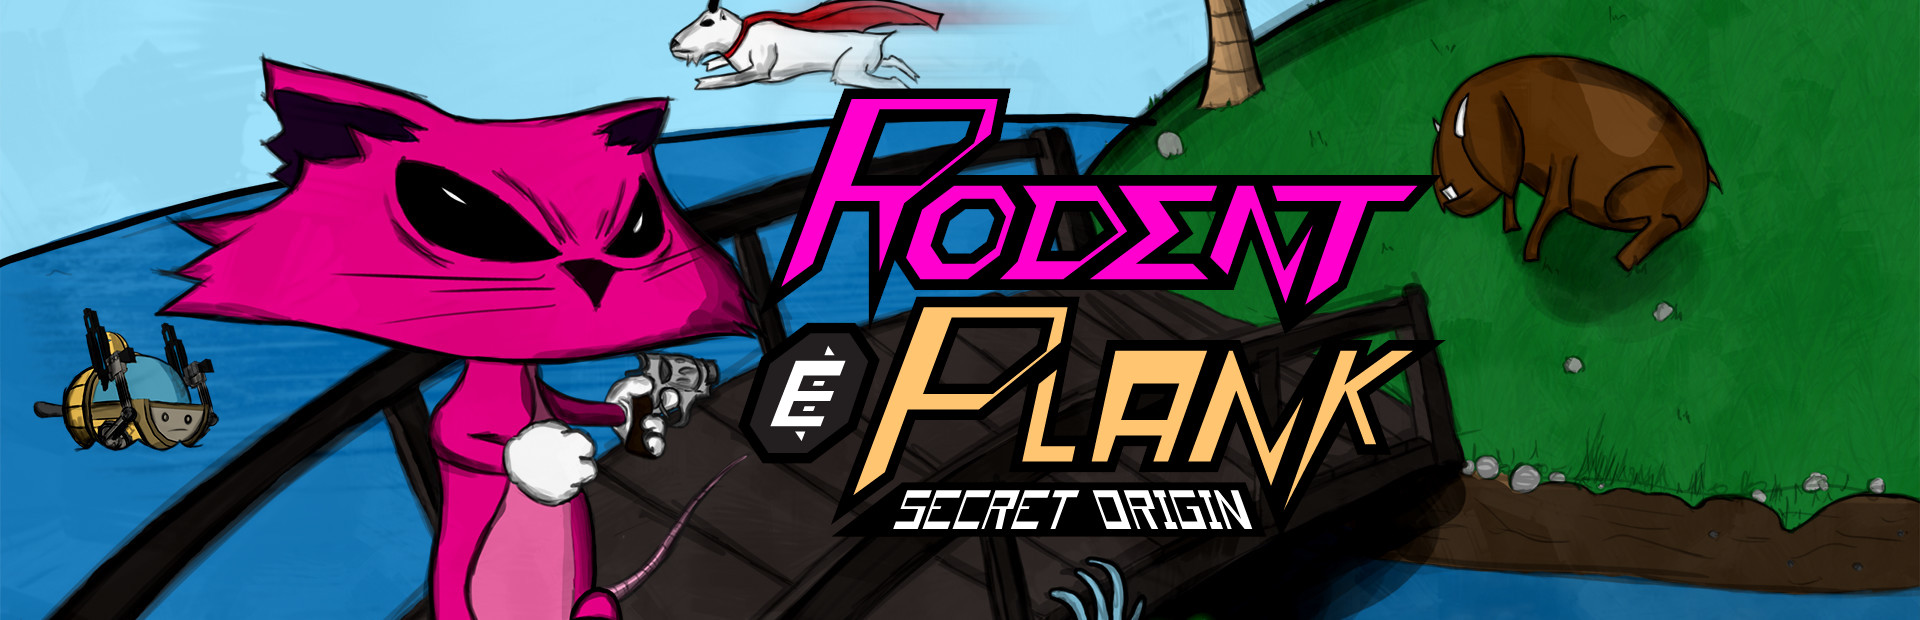 Rodent and Plank: Secret Origin